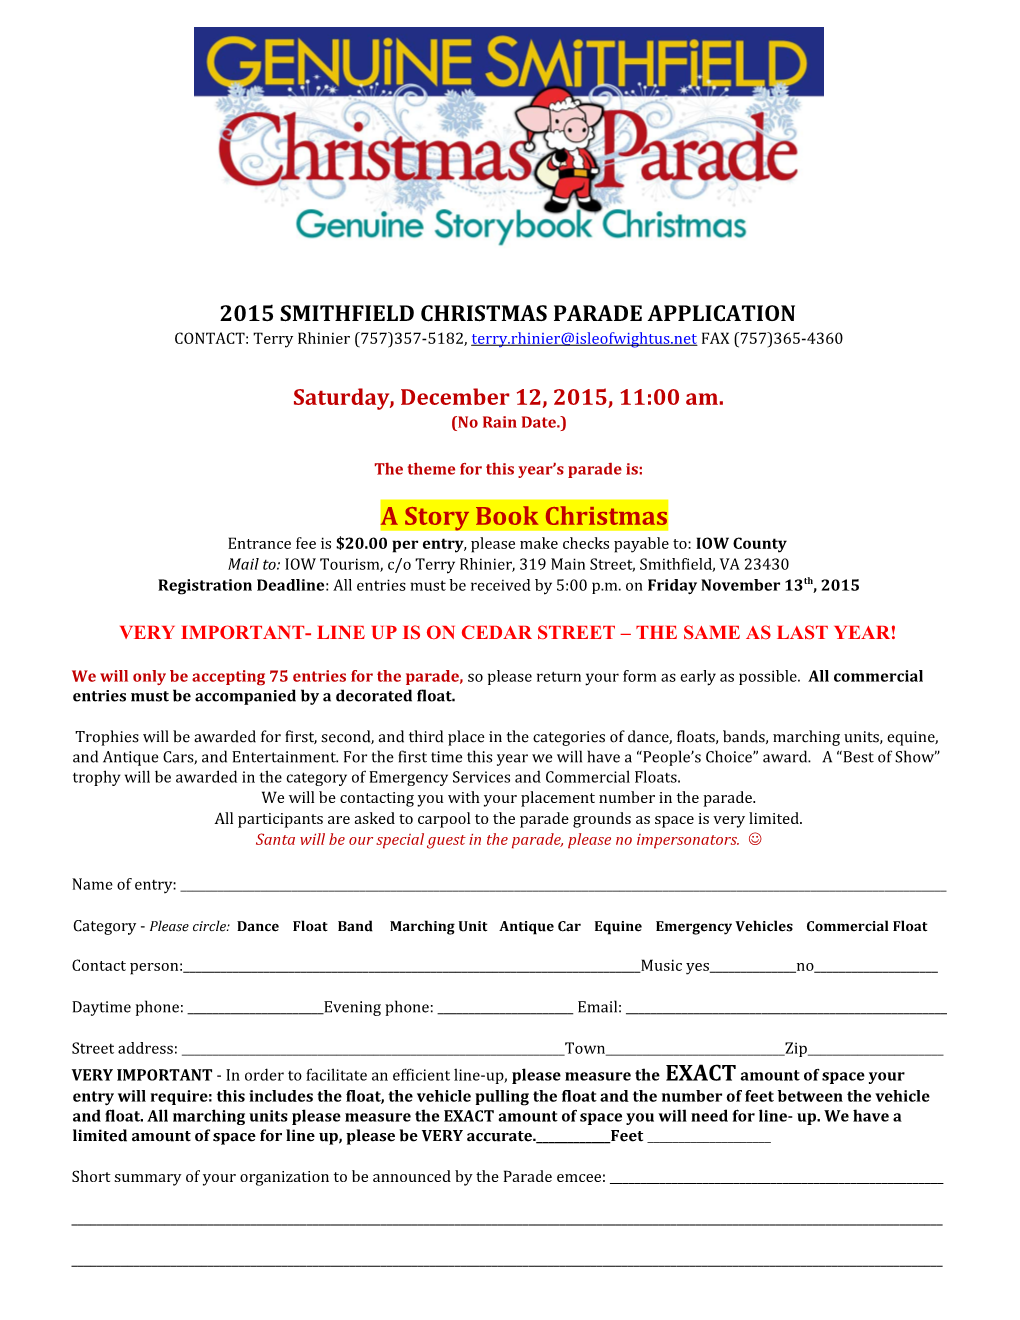 2015 Smithfield Christmas Parade Application